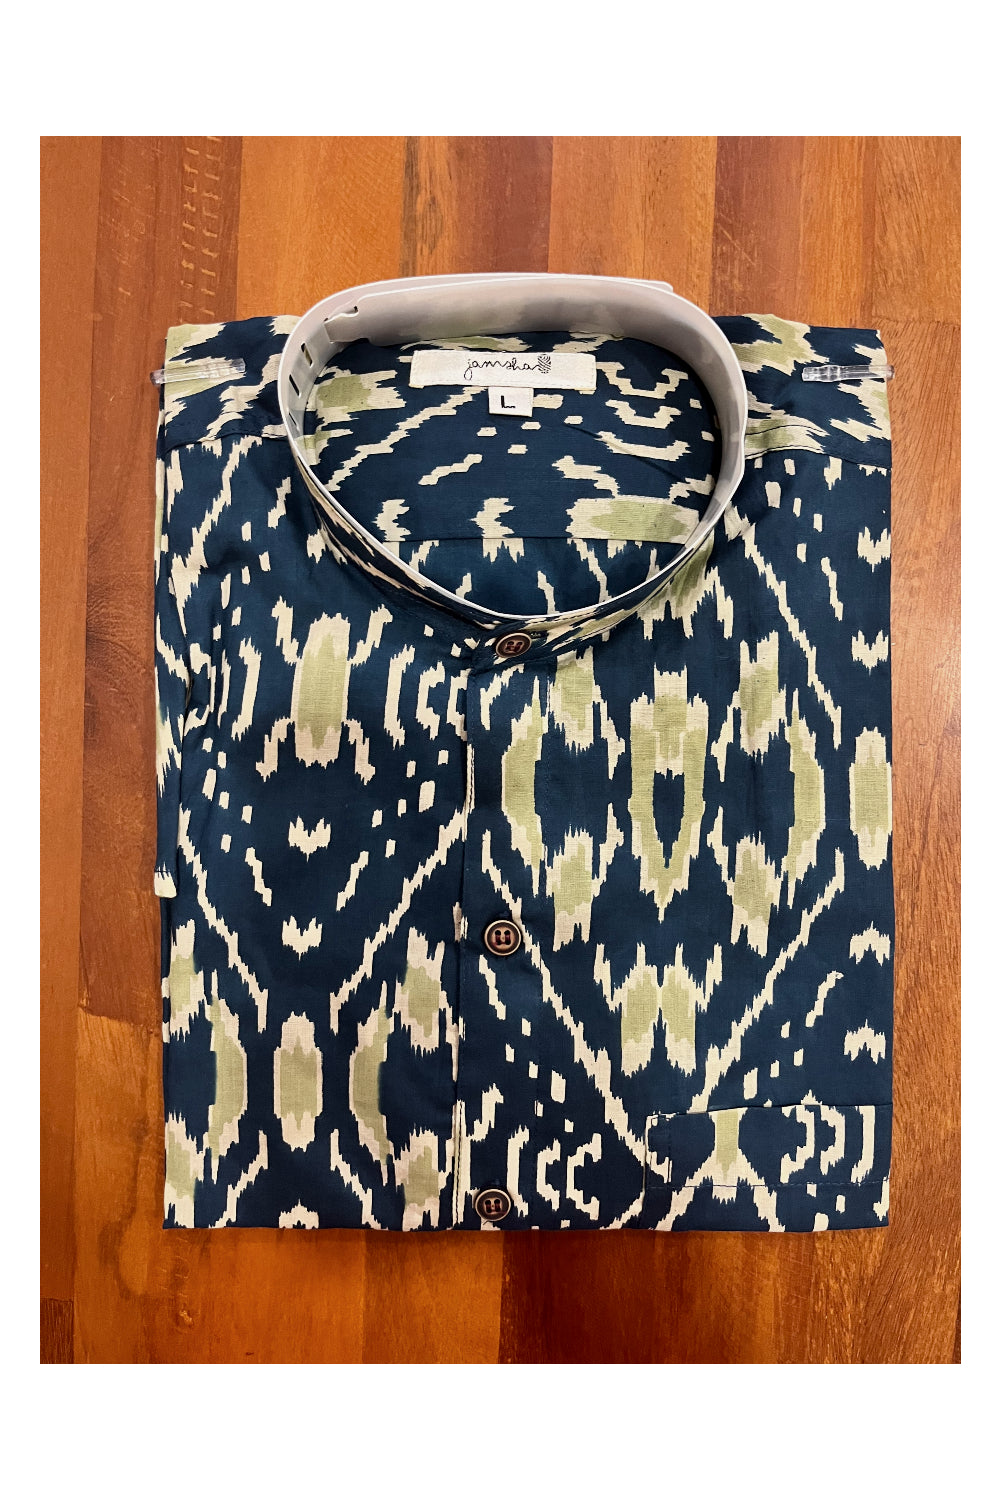 Southloom Jaipur Cotton Blue Green Hand Block Printed Mandarin Collar Shirt (Full Sleeves)